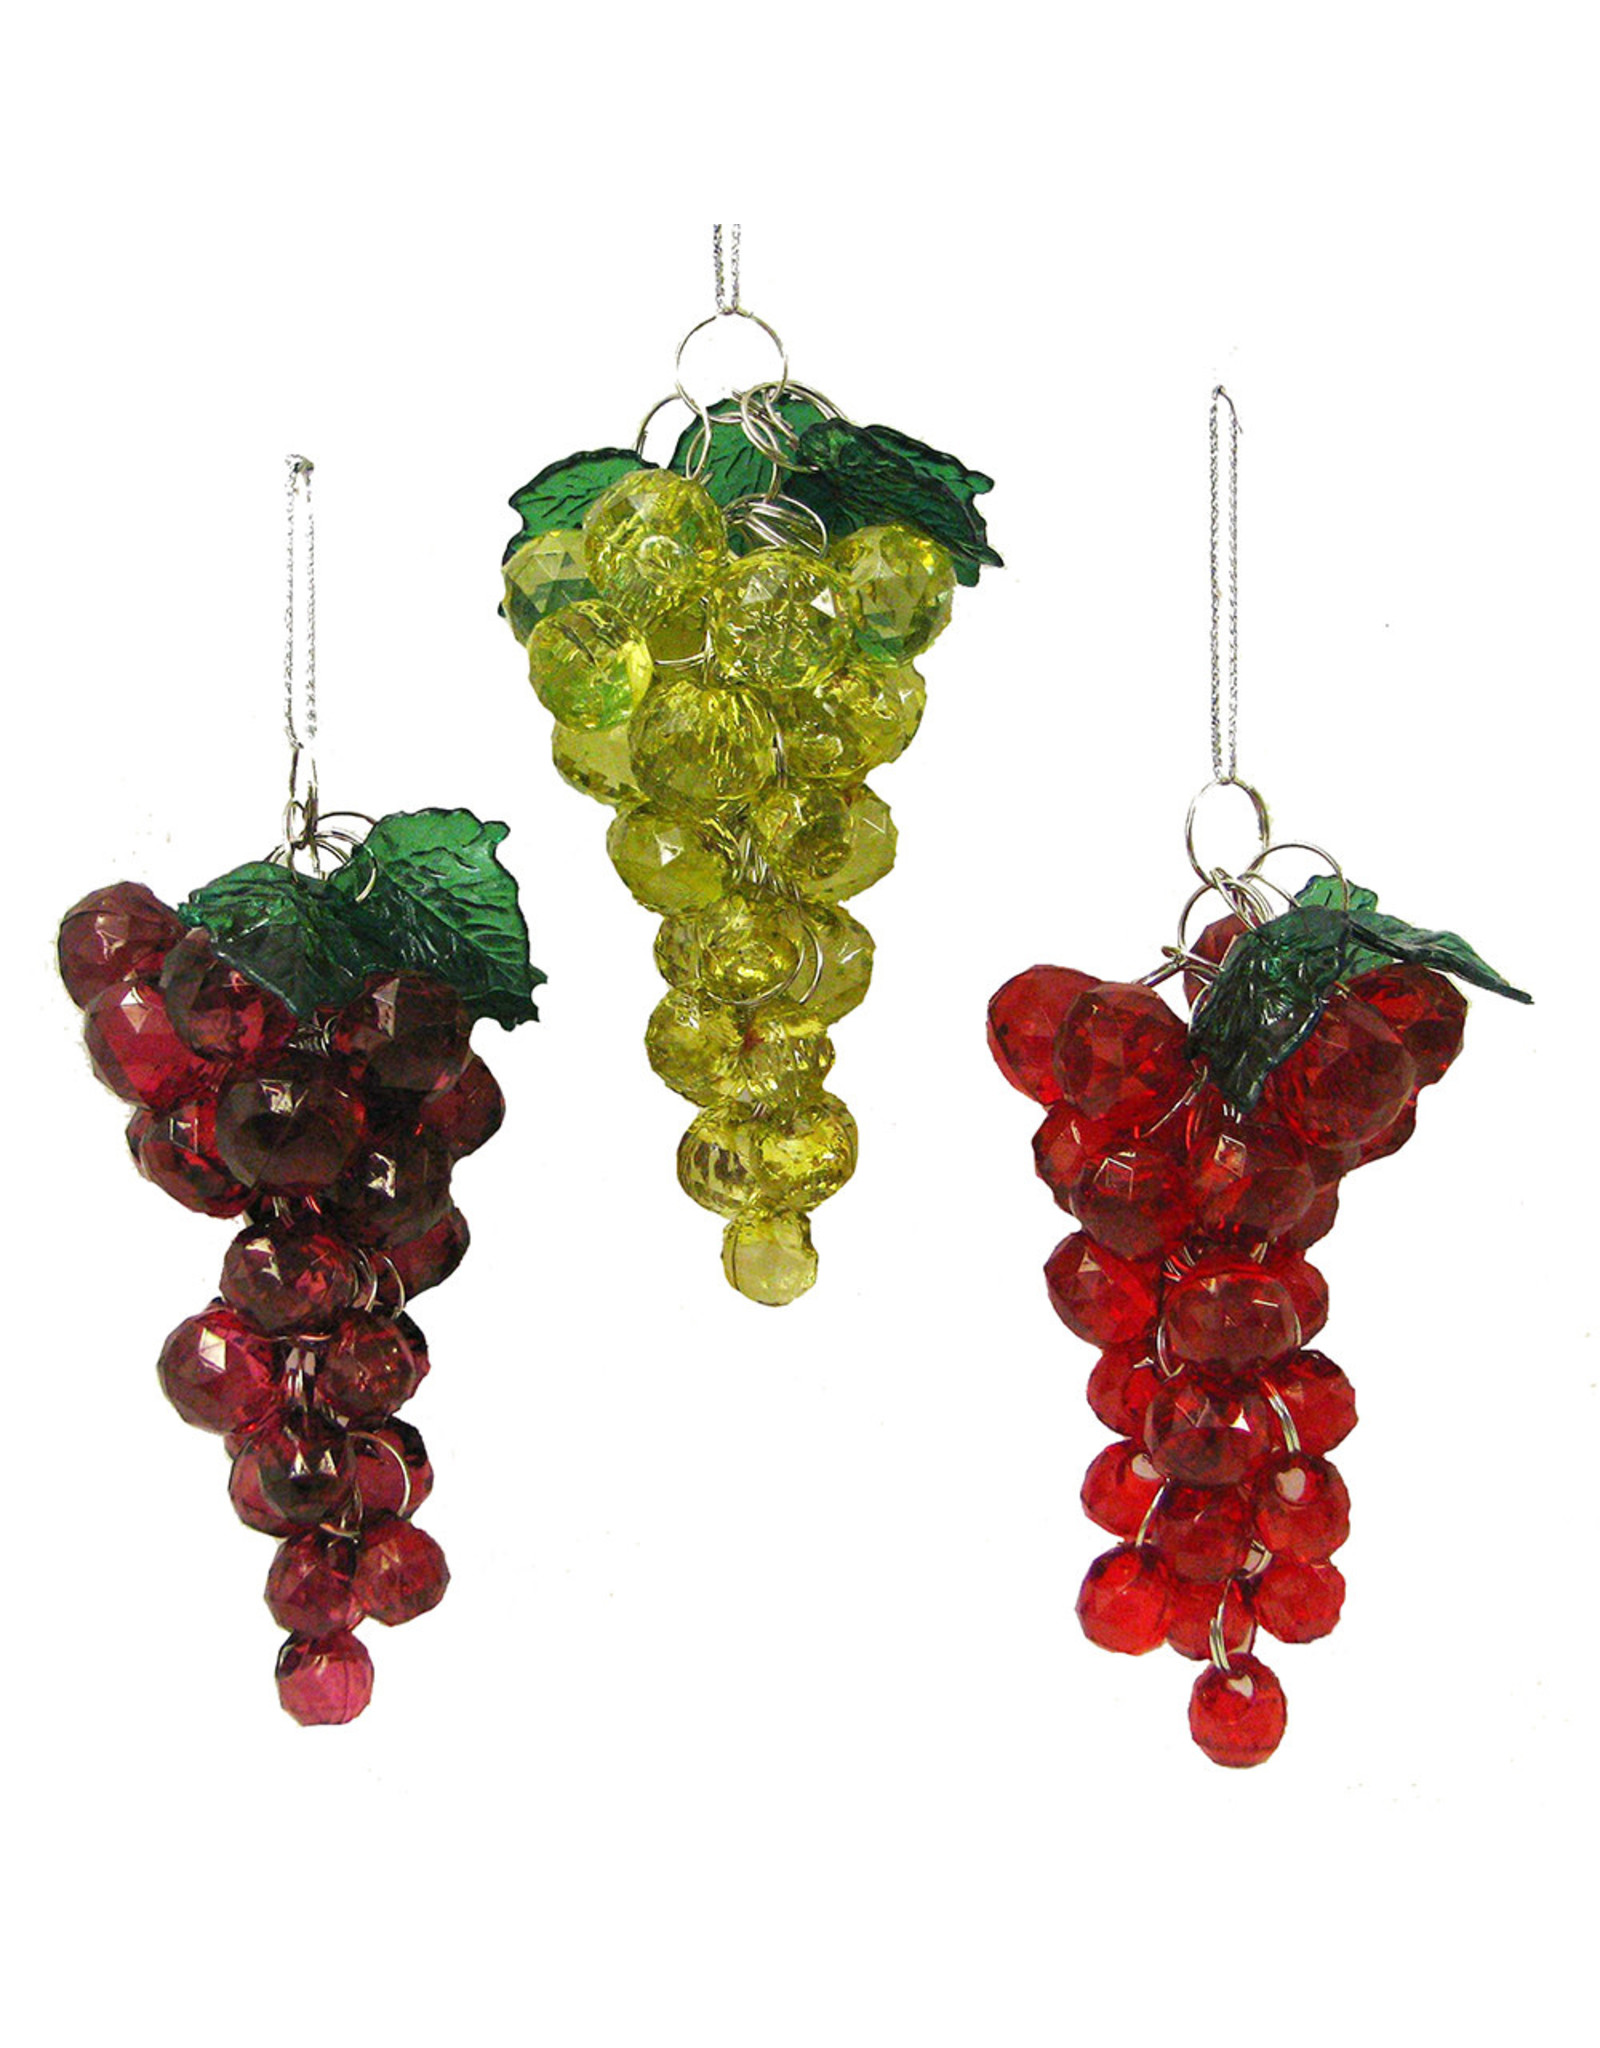 Kurt Adler Beaded Grape Ornaments 3 Assorted